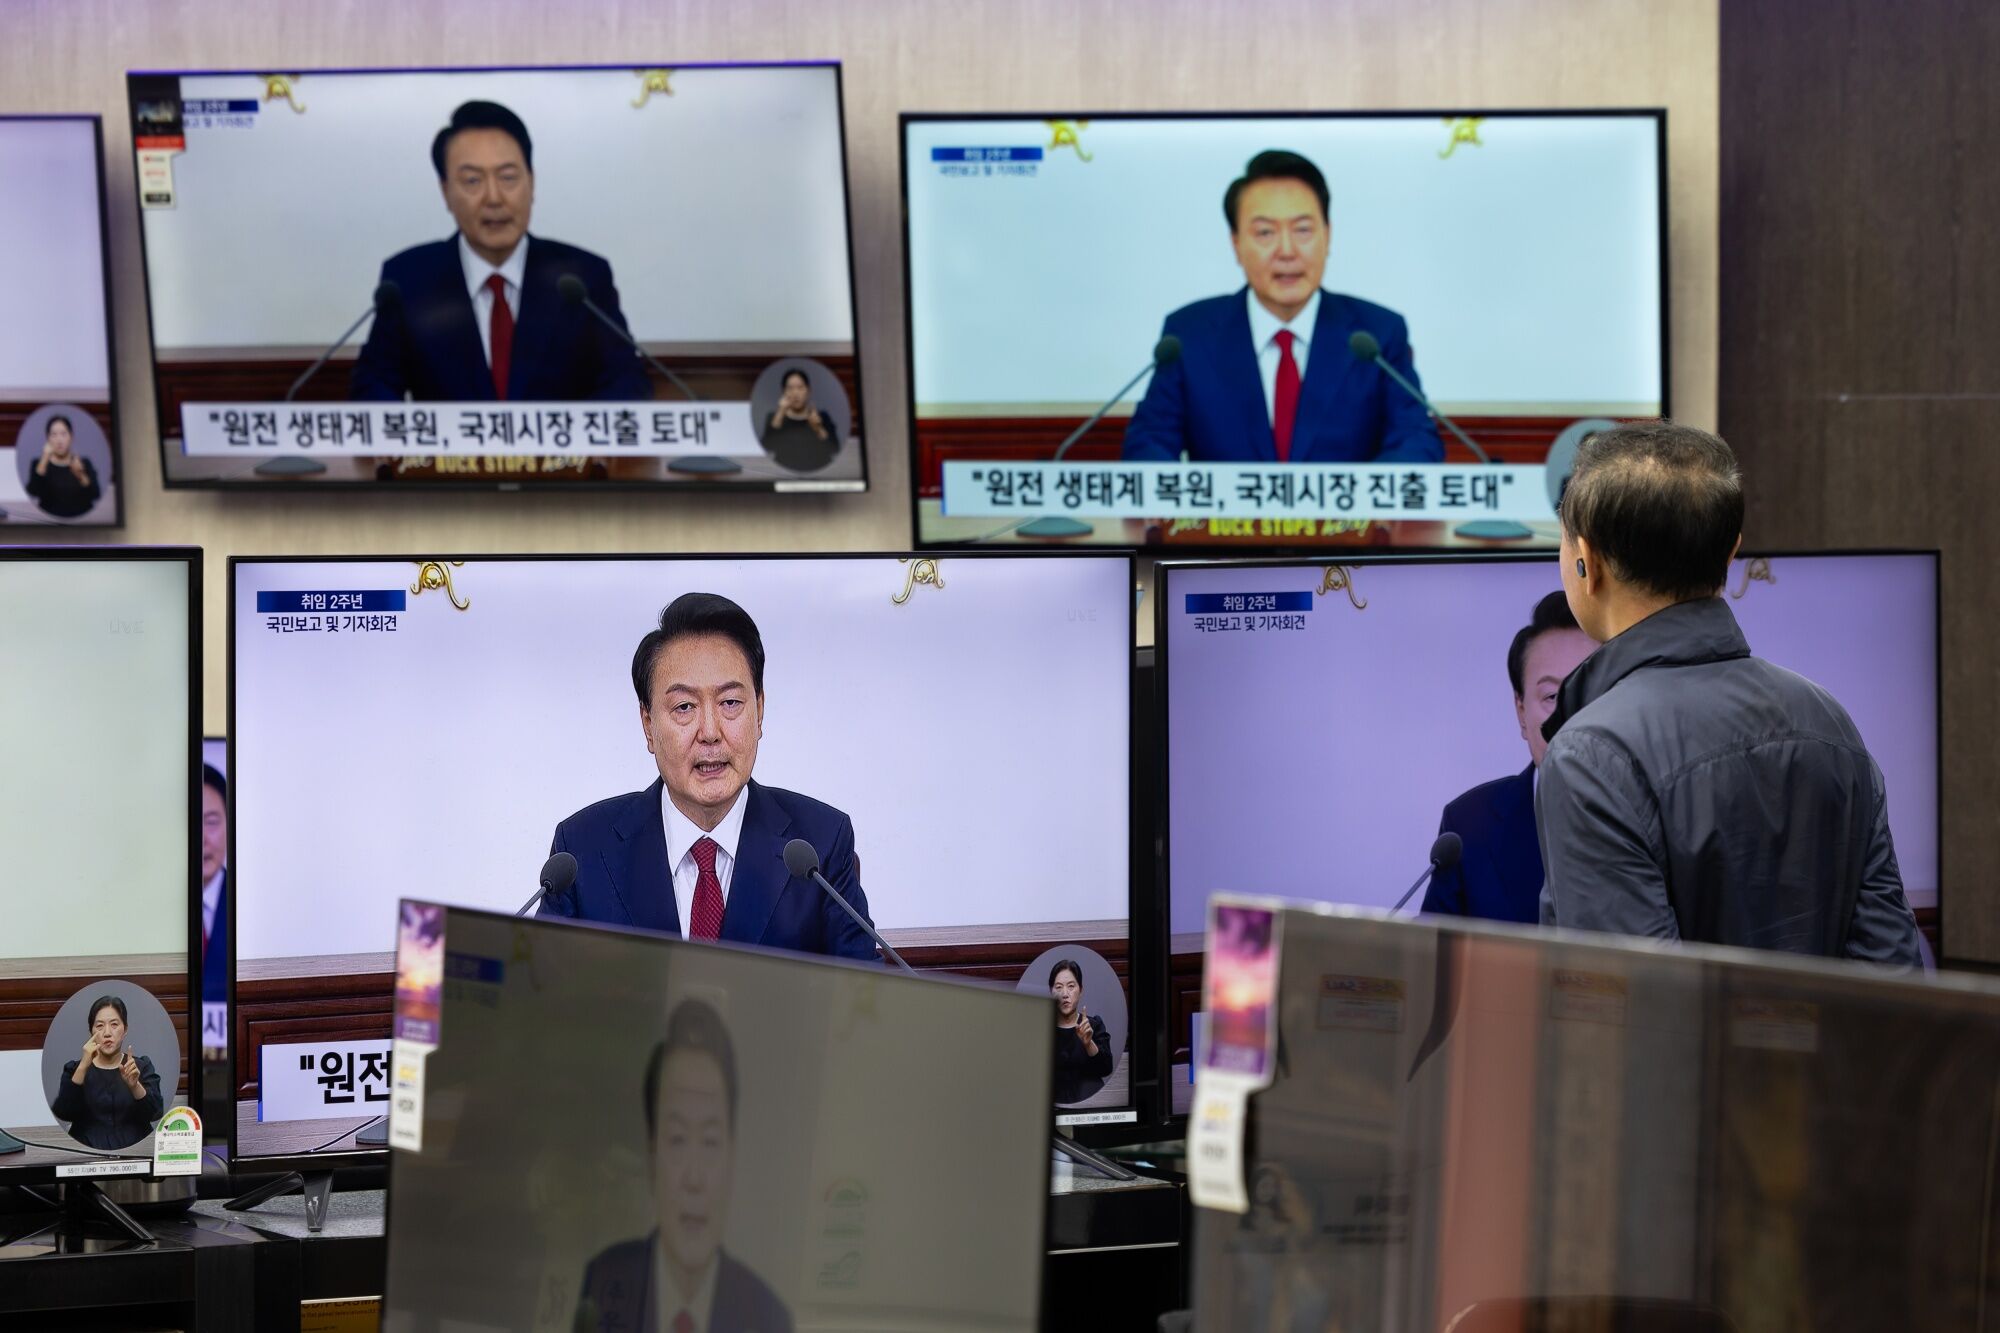 south korea’s president apologizes for bag uproar as he seeks to reset agenda